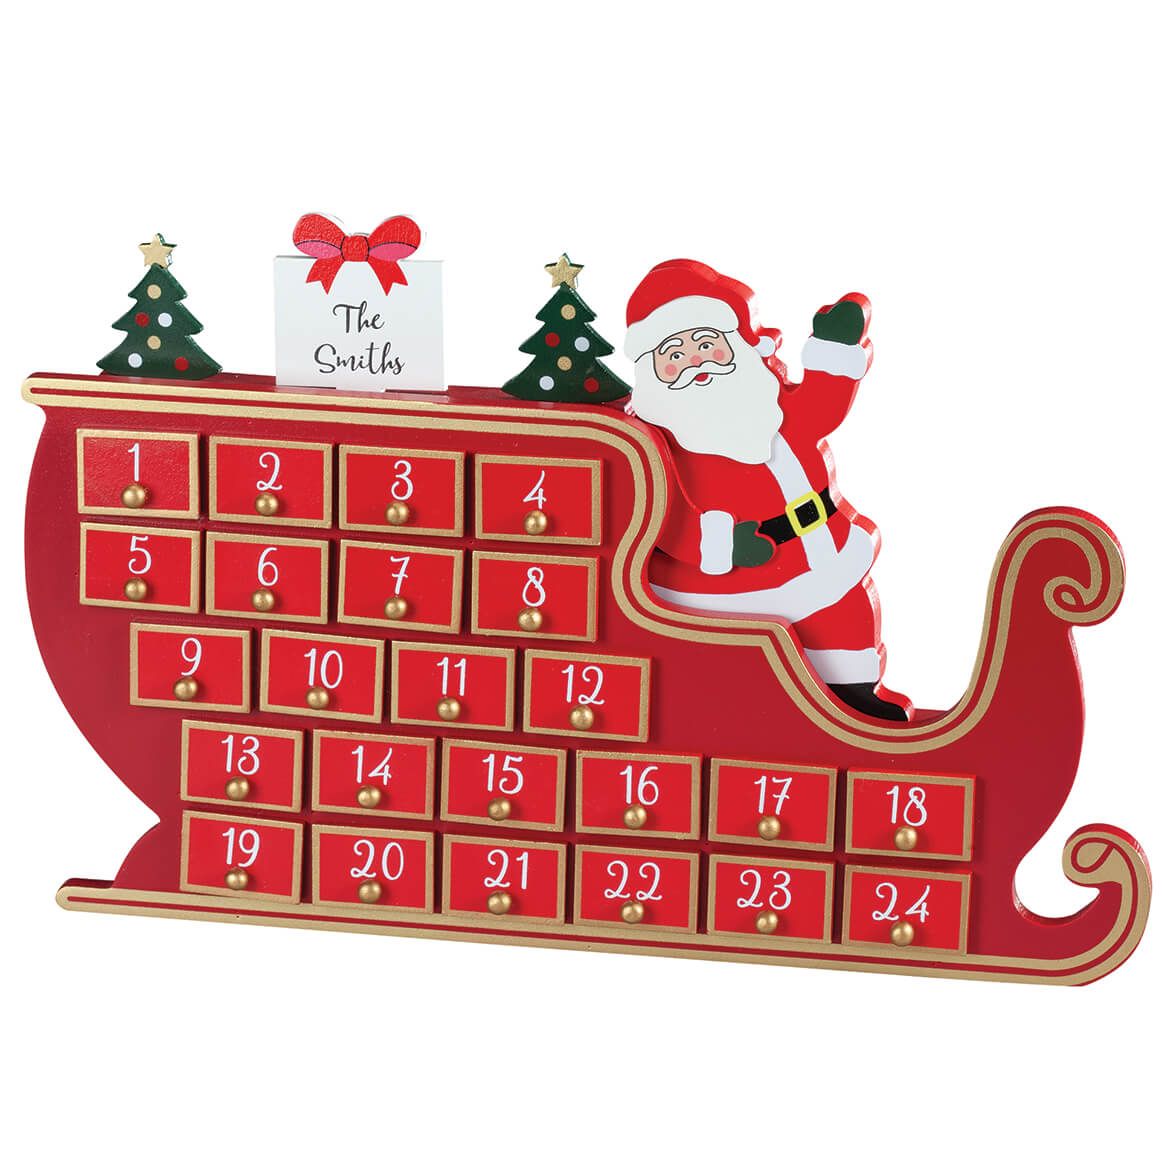 Personalized Wood Santa Sleigh Countdown Calendar By Holiday Peak™ + '-' + 375937